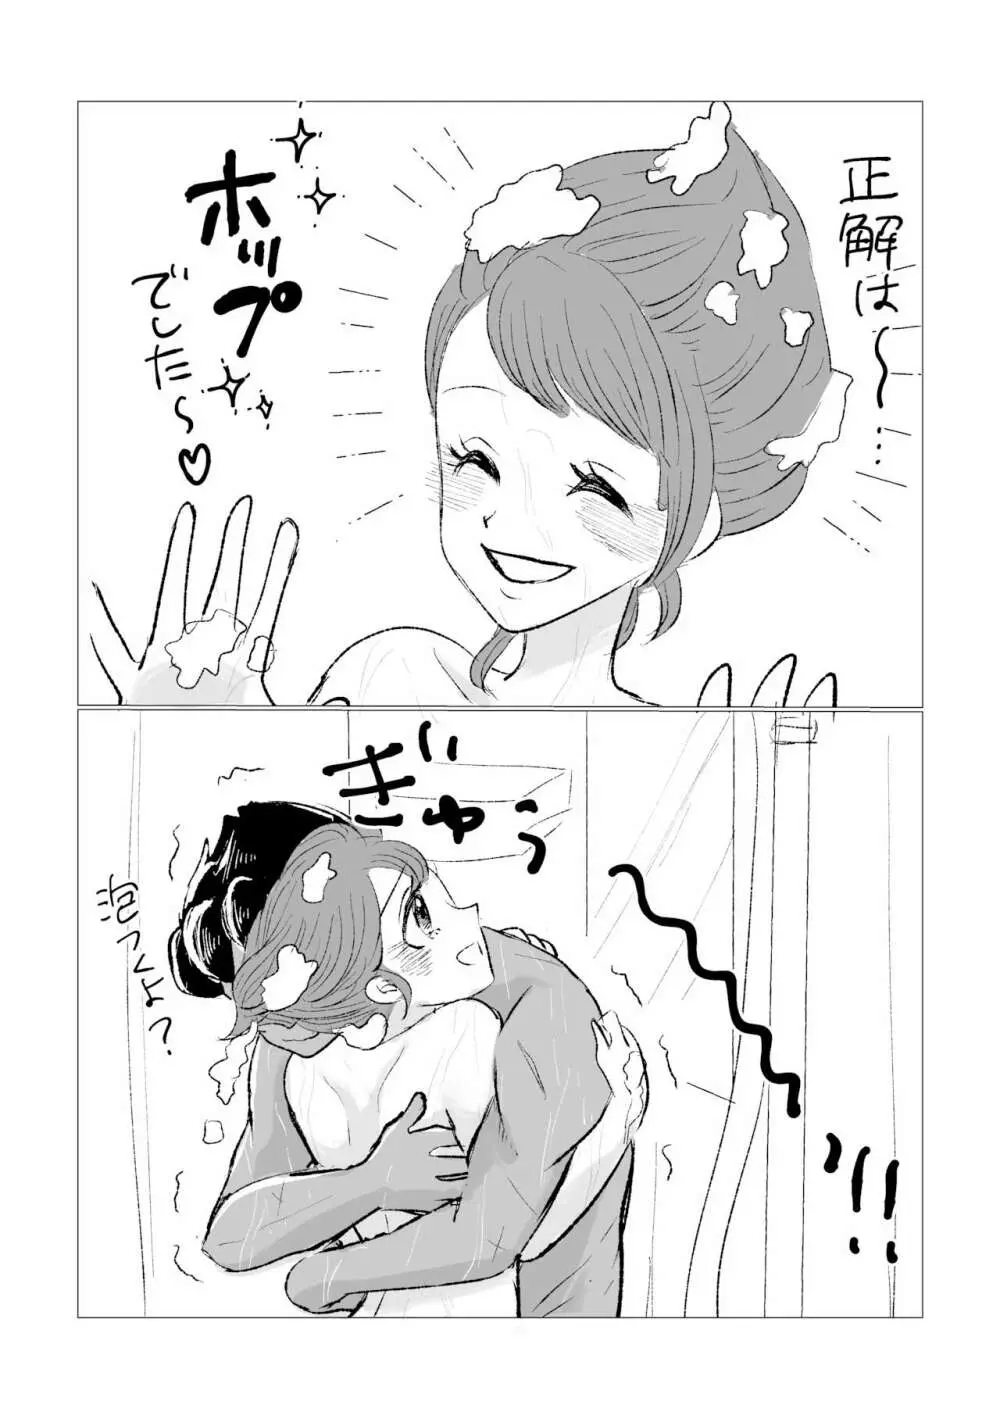 Chotto etchina hopuyuu manga-dzume - page5